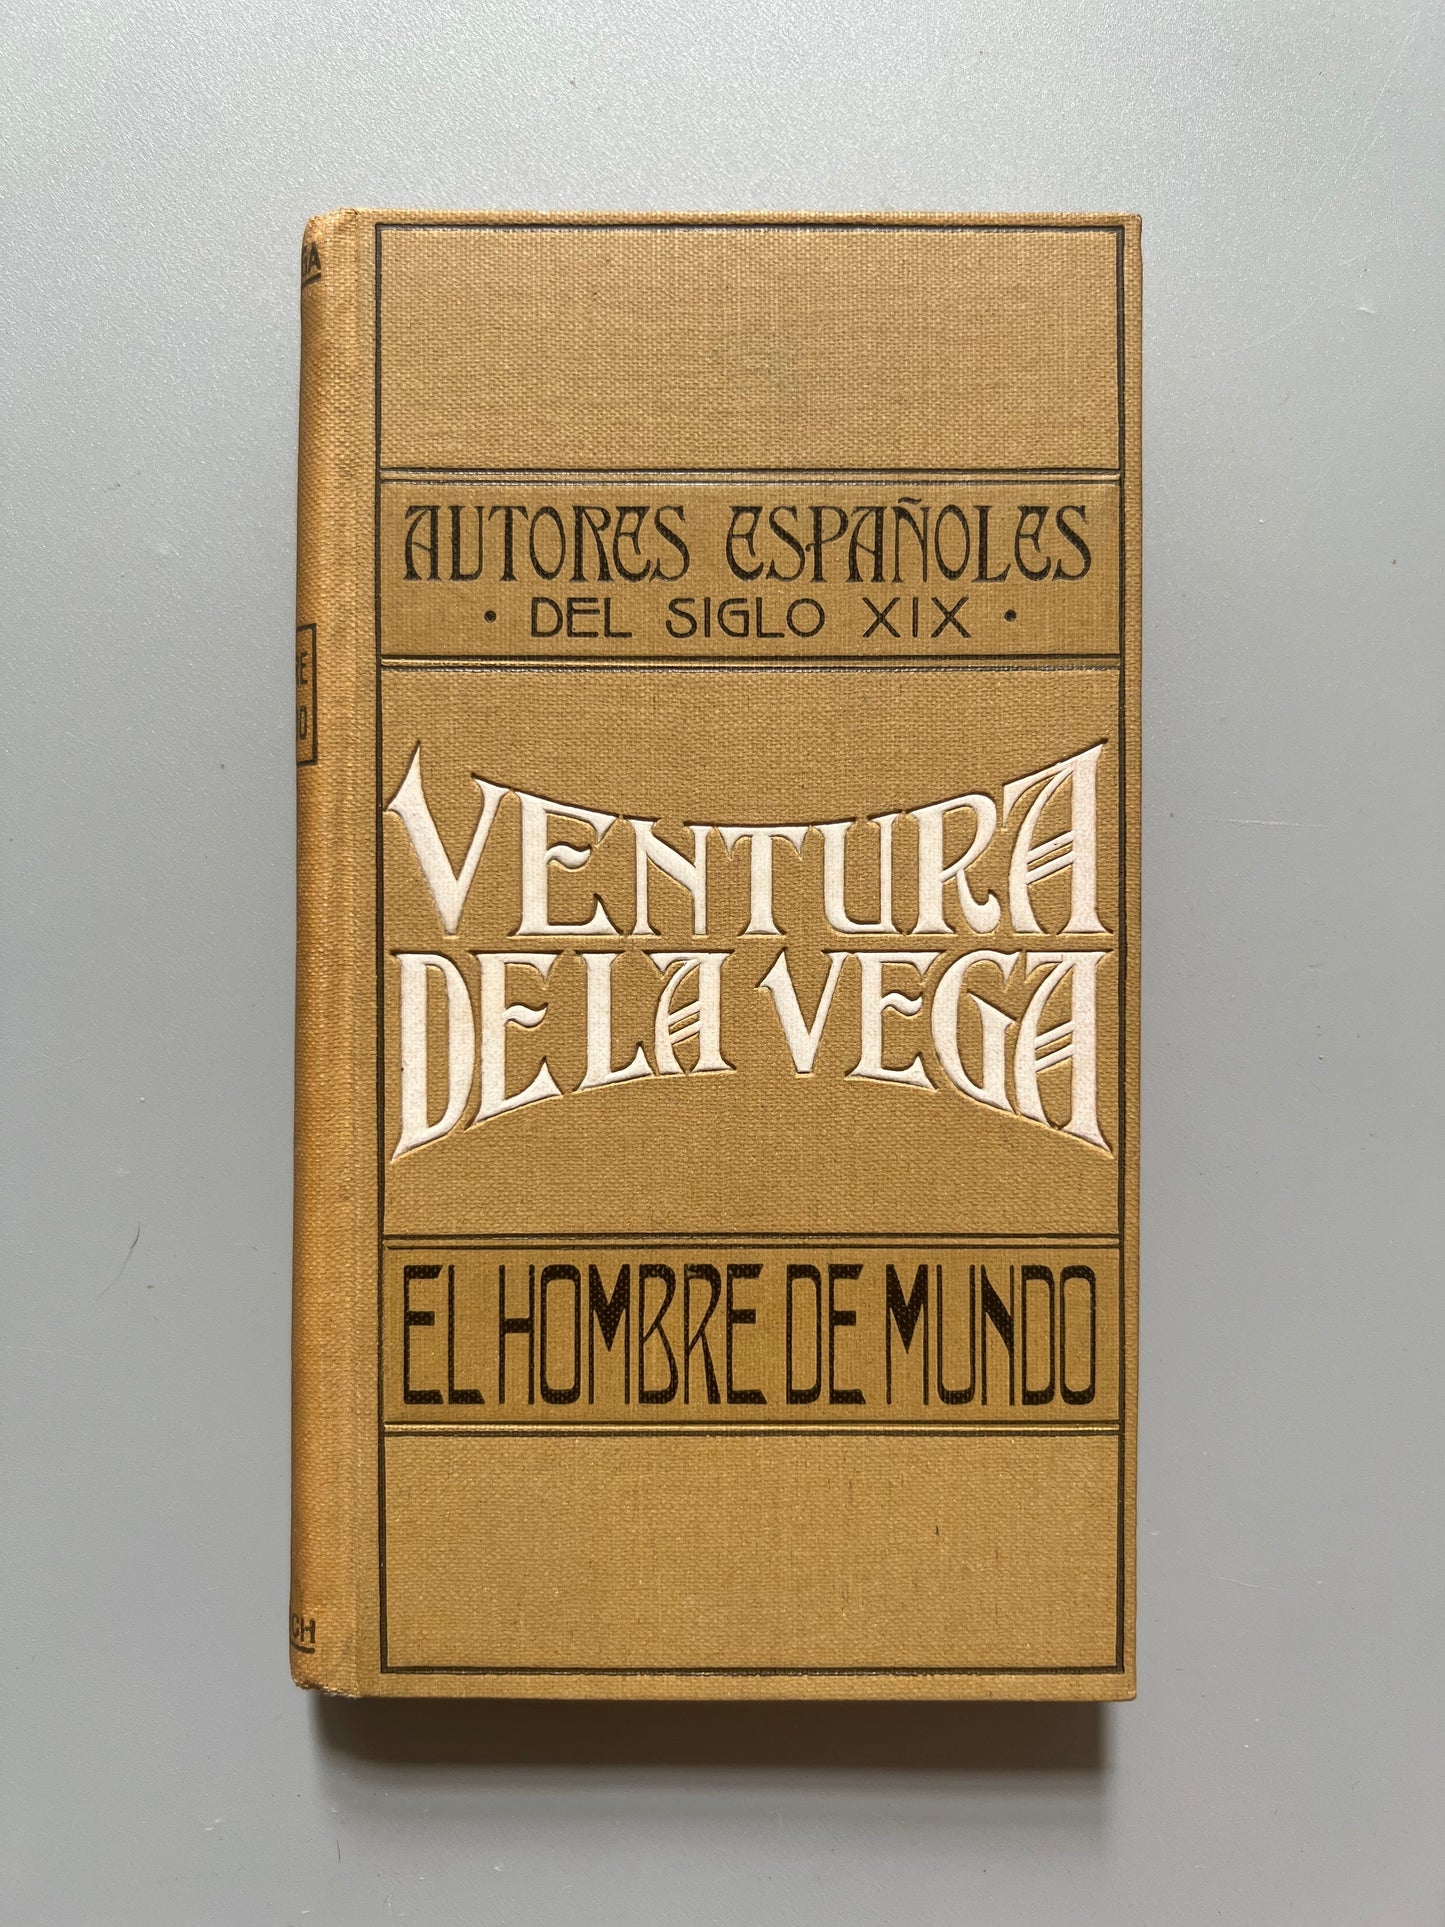 El hombre de mundo, Ventura de la Vega - E. Domenech, 1914